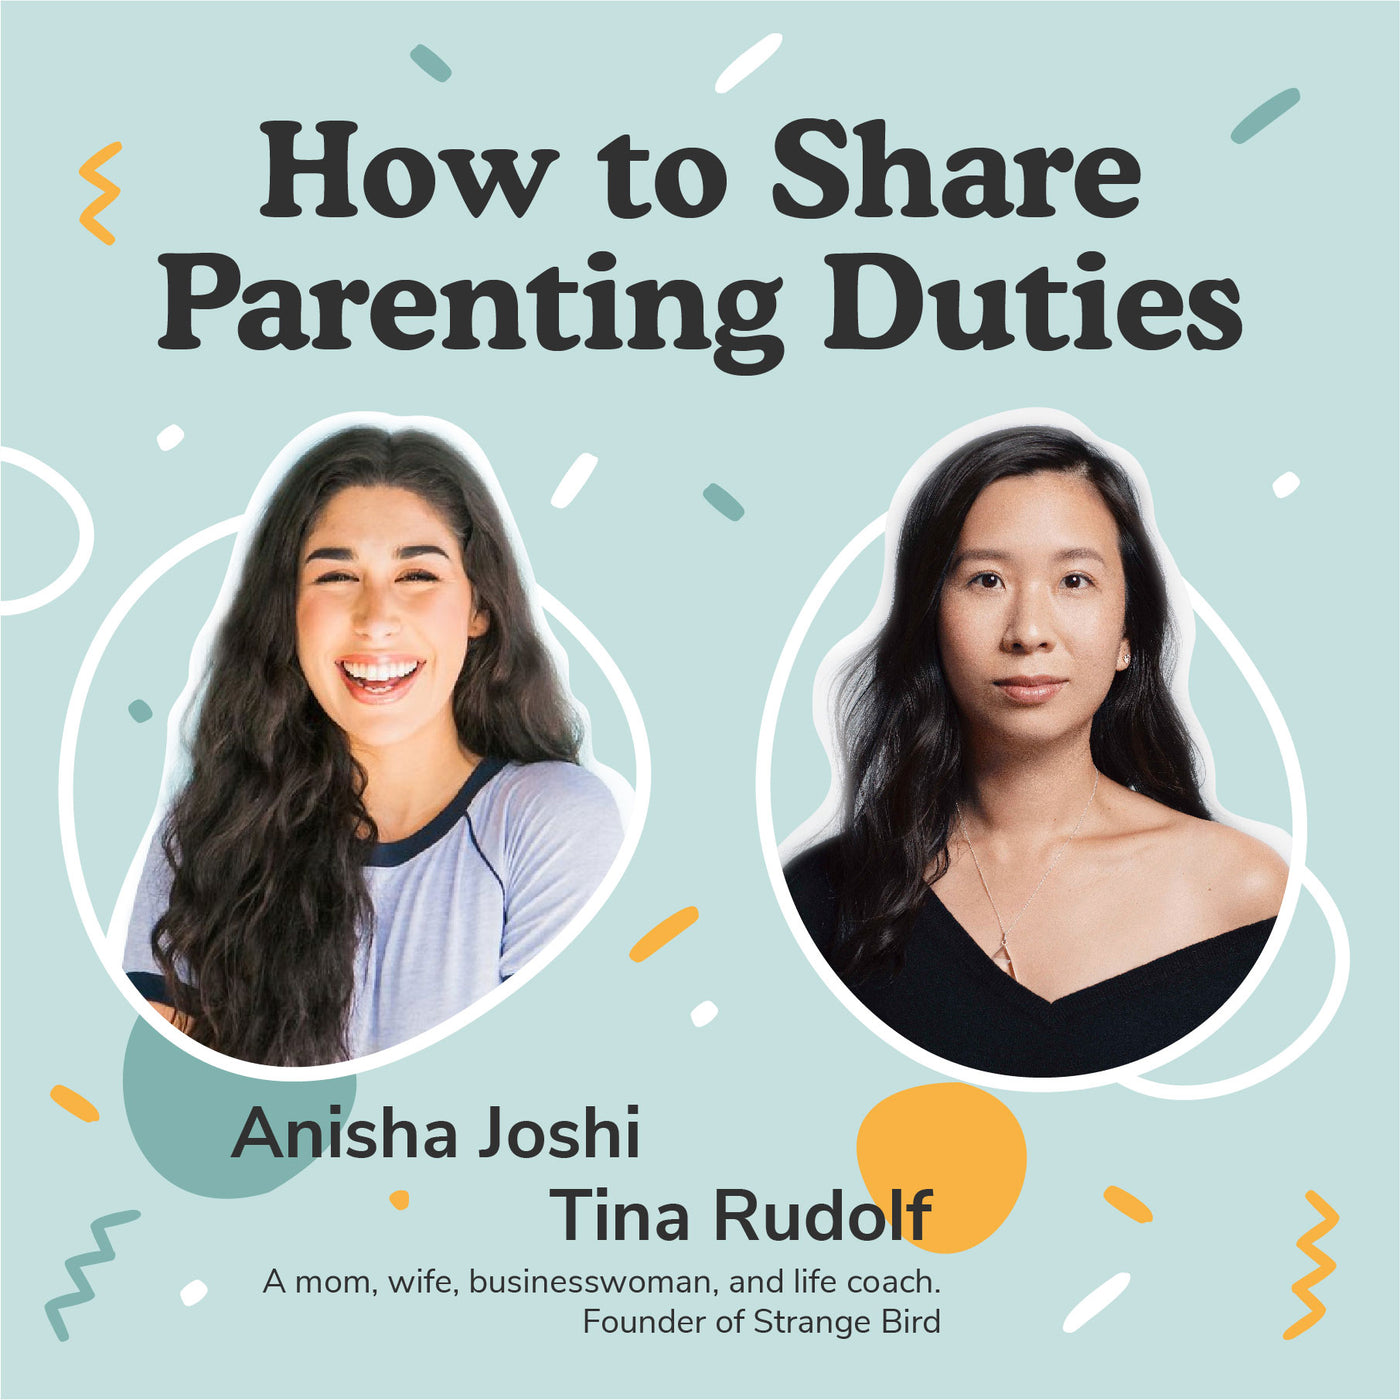 How to share parenting, 2021, TOP Tips, family duties, responsible of parents, parenting duties